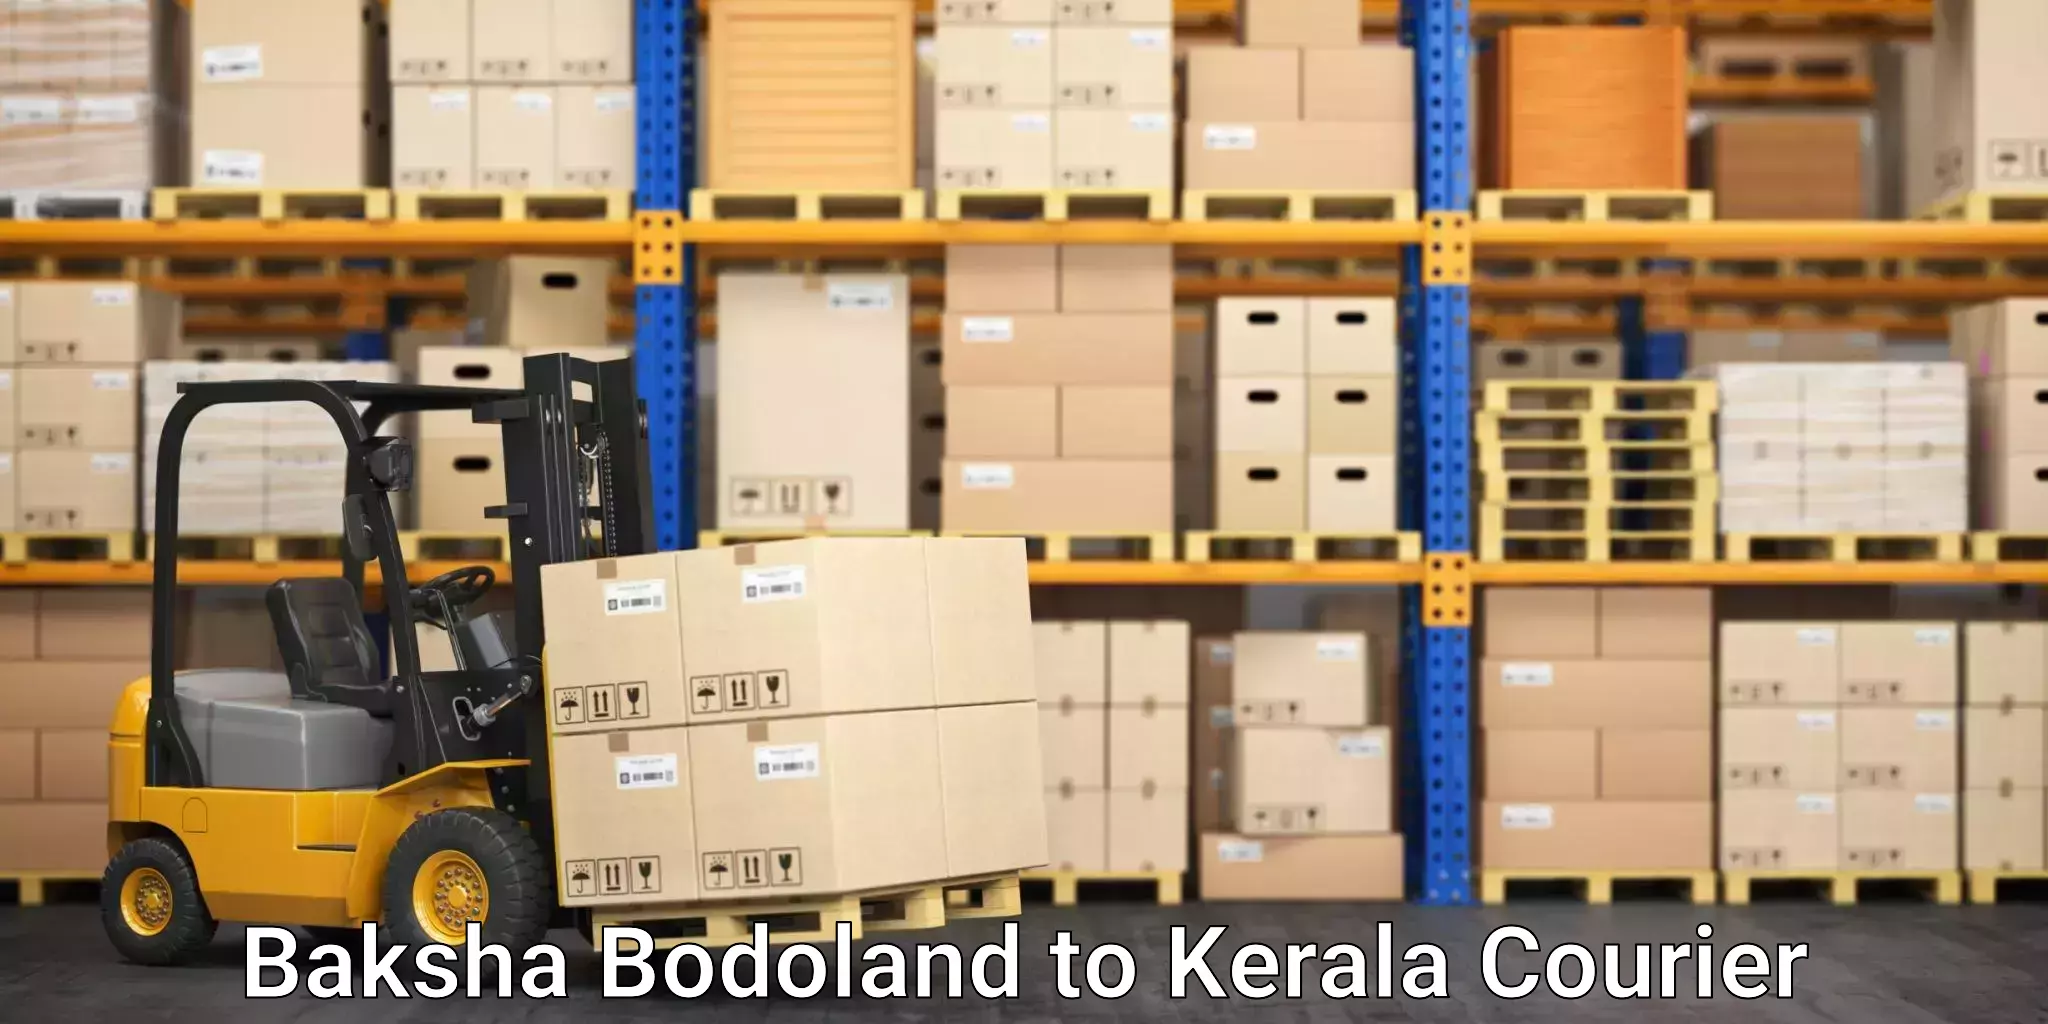 Courier service partnerships Baksha Bodoland to Valanchery